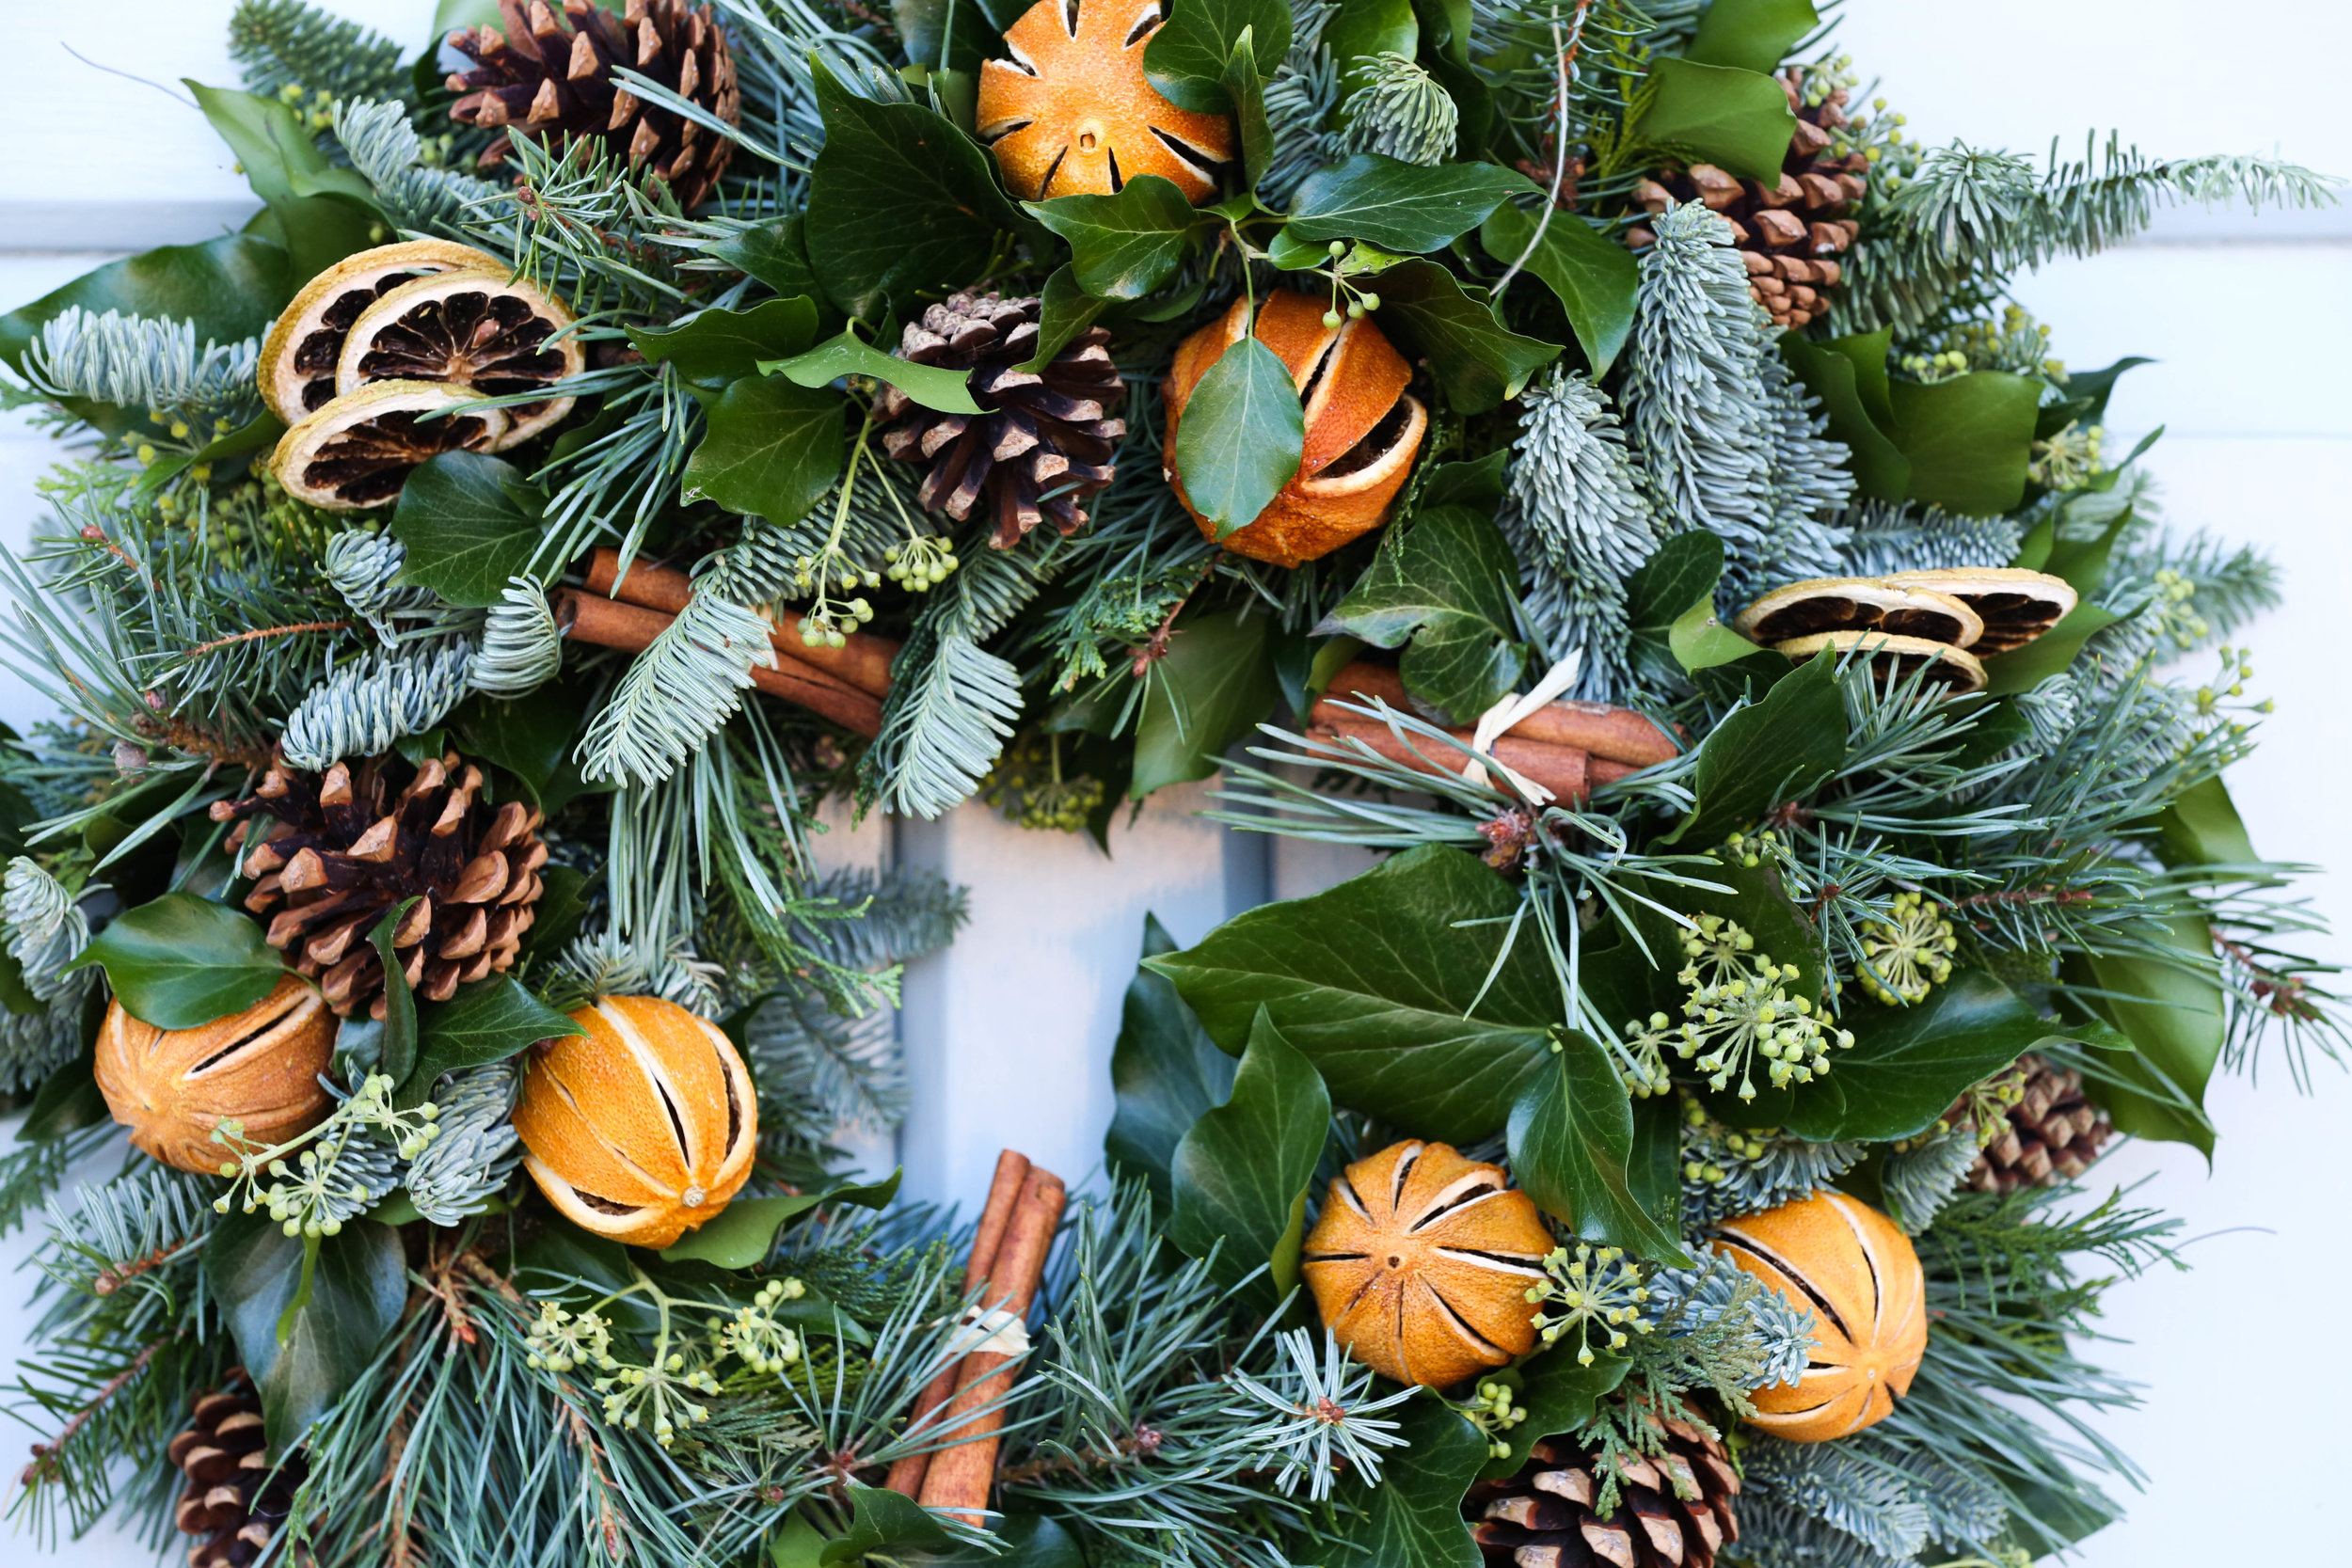 Traditional Christmas wreath